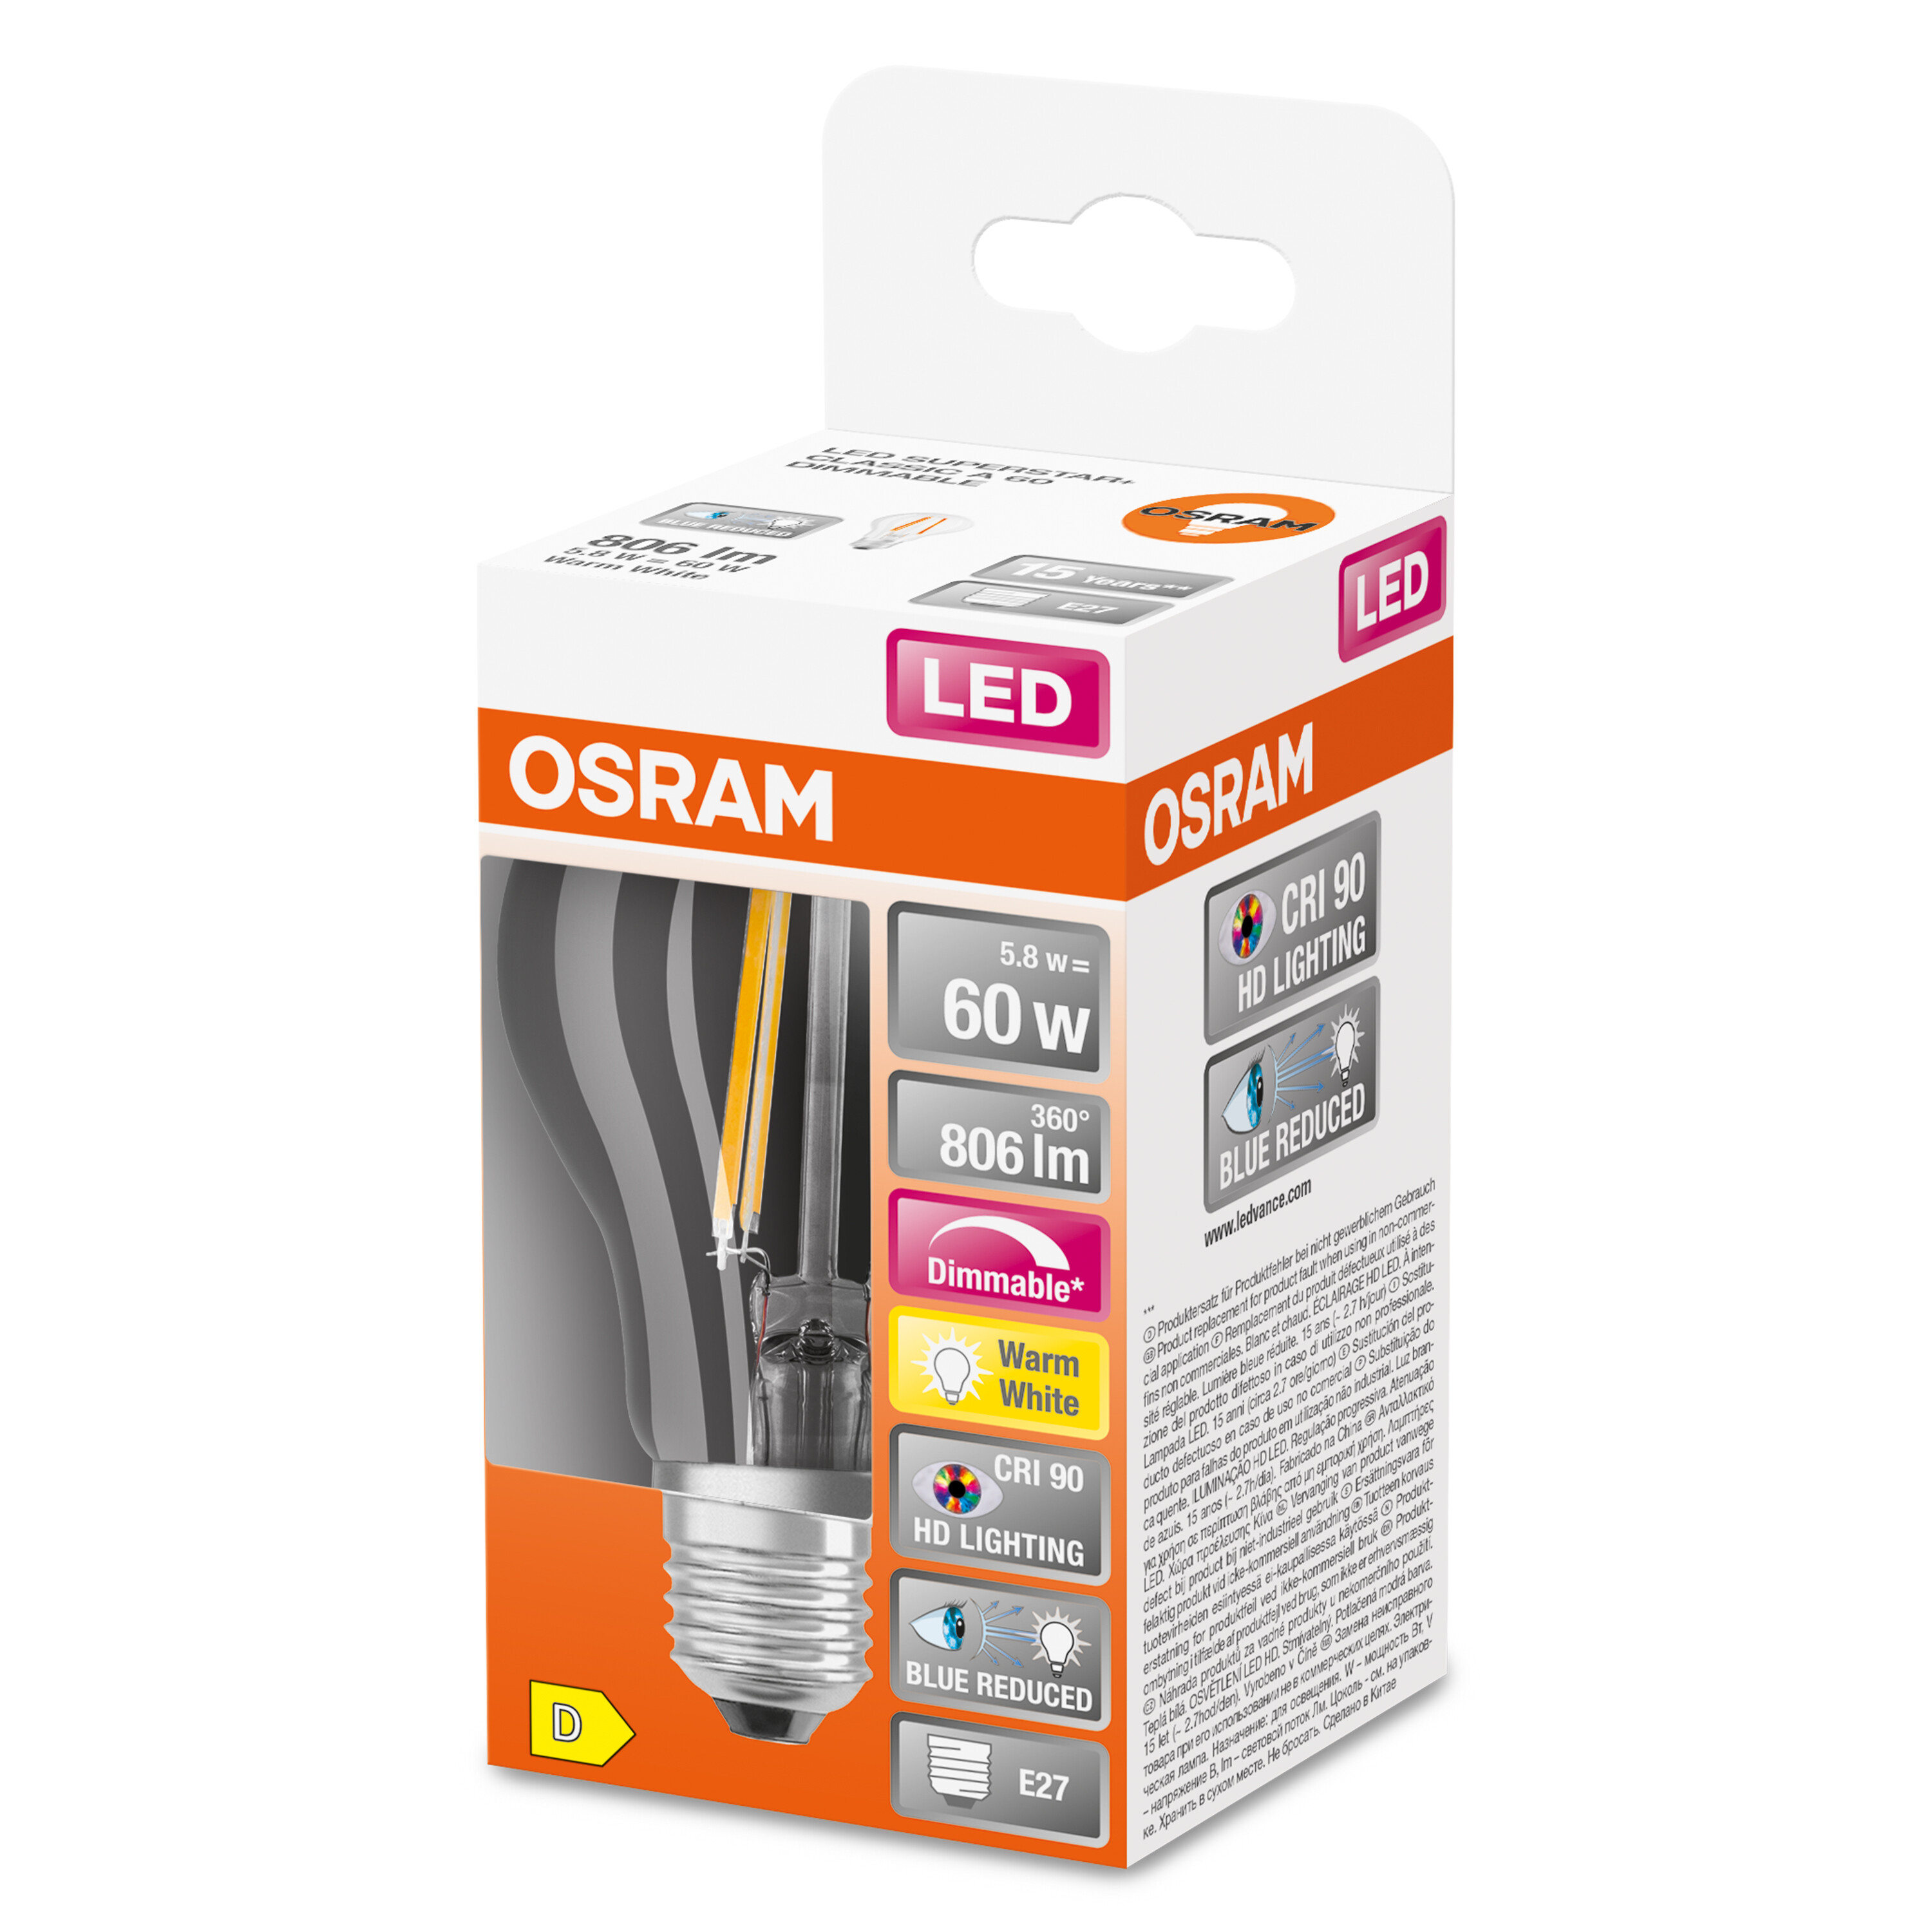 Warmweiß 806 Lumen OSRAM  LED A FILAMENT CLASSIC LED Lampe SUPERISTAR PLUS